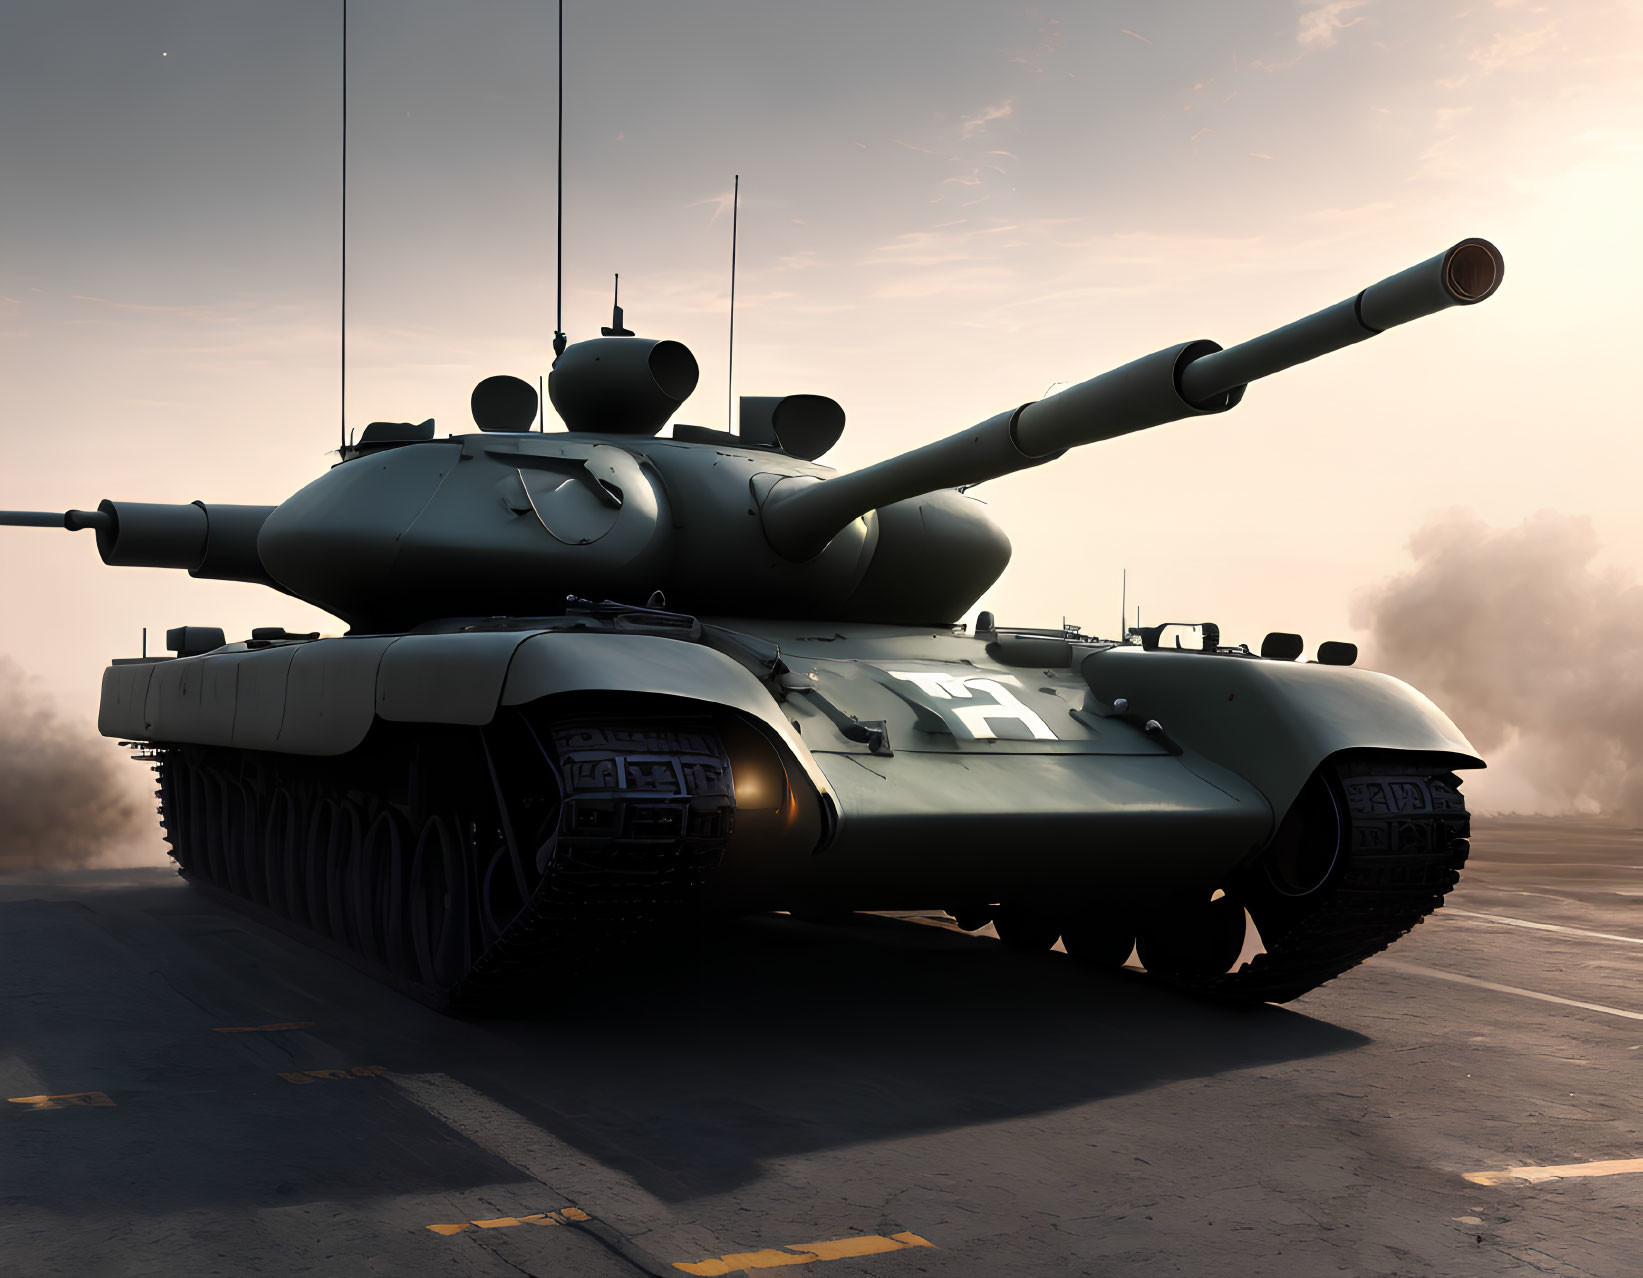 Modern Battle Tank at Dusk with Dramatic Lighting